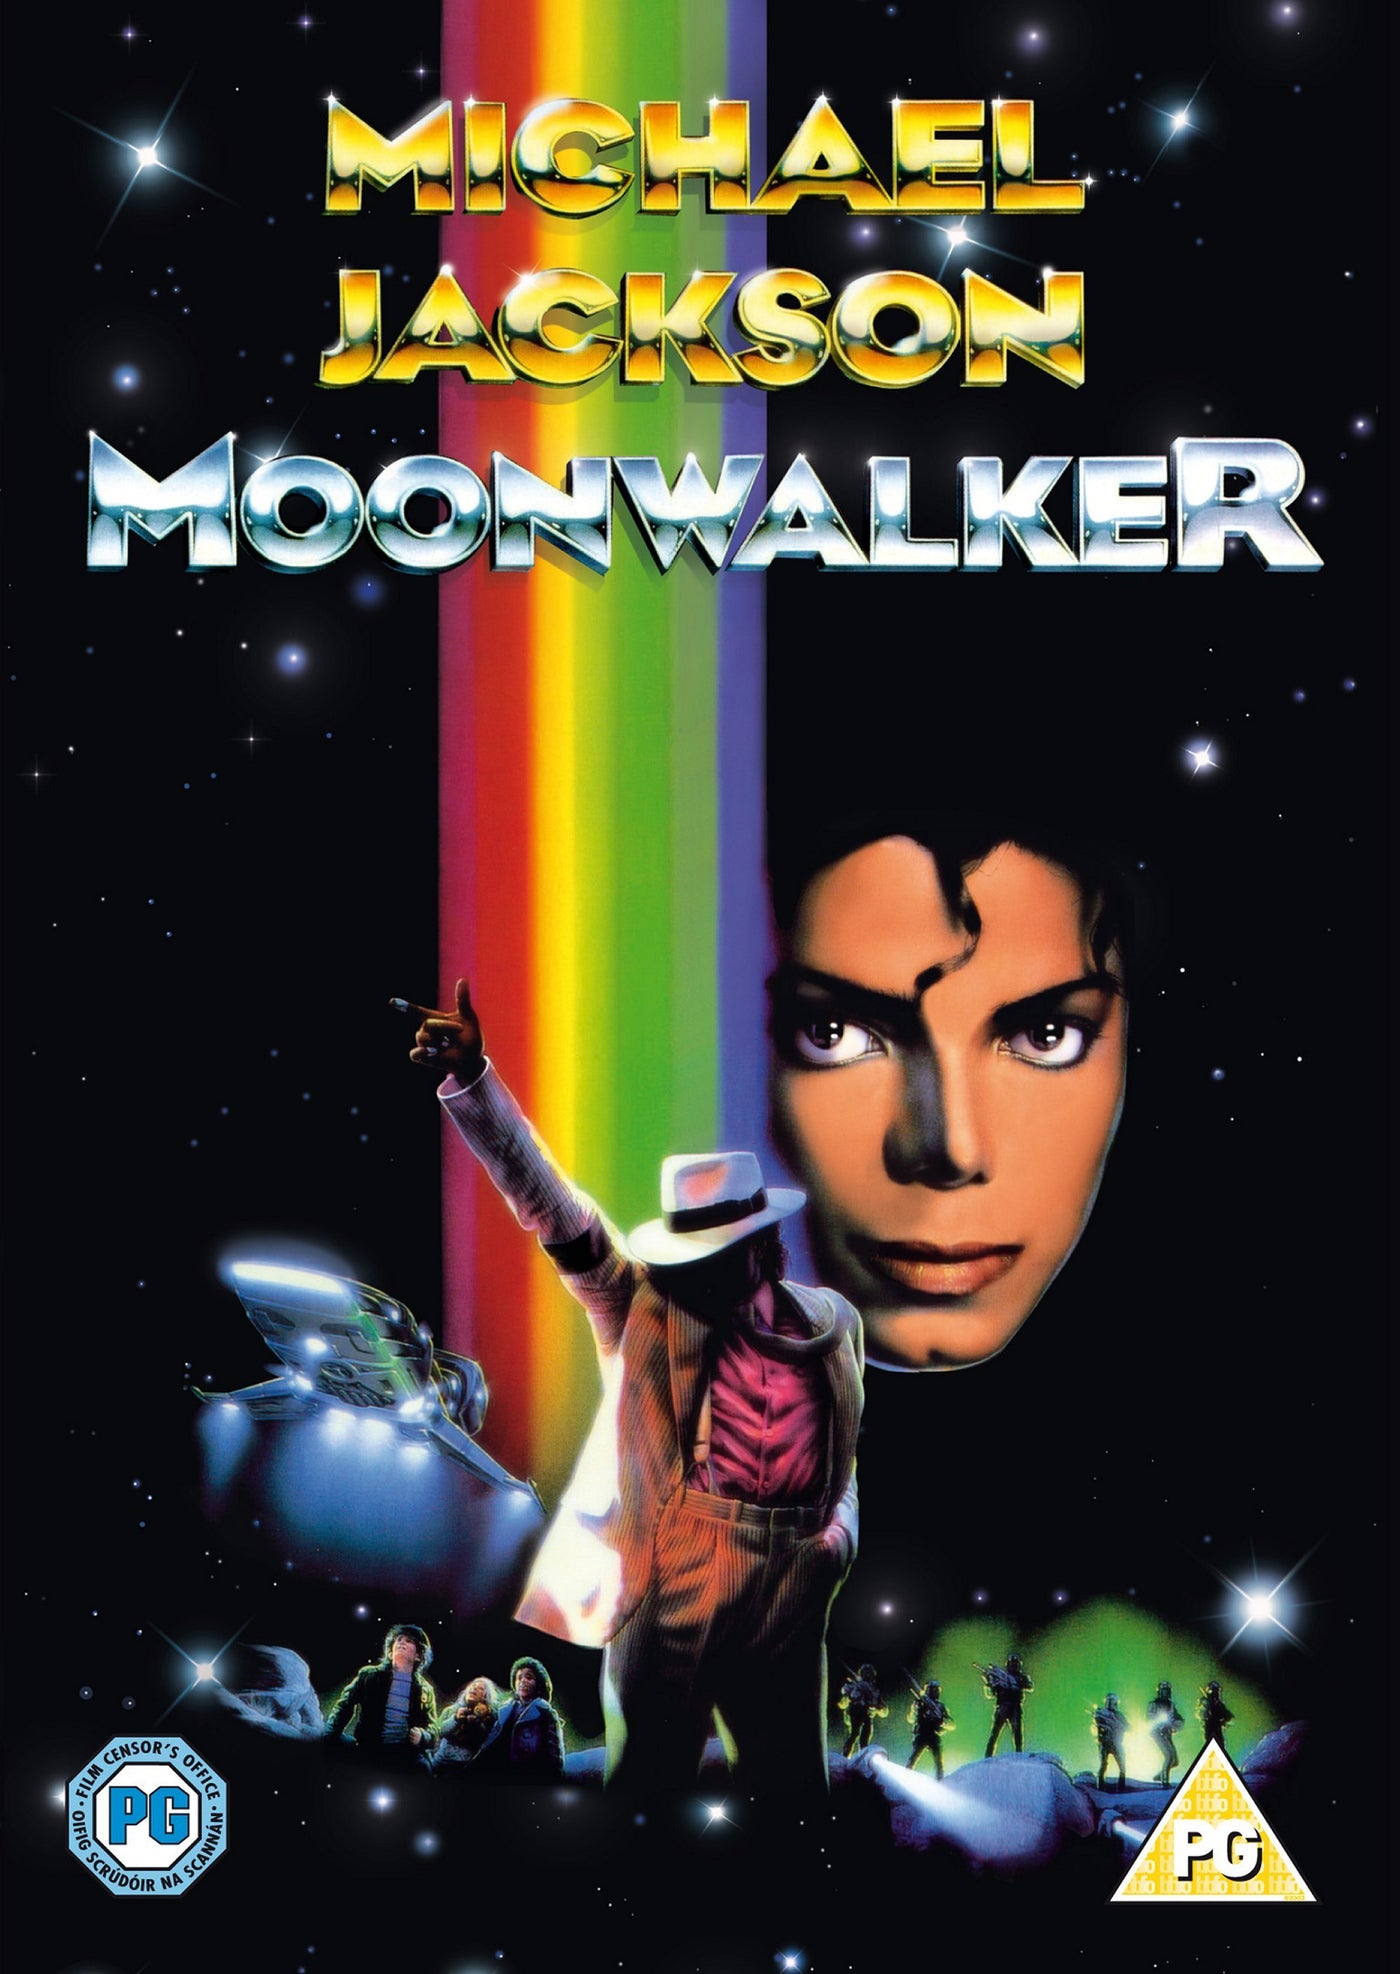 Moonwalker [1988] (DVD)